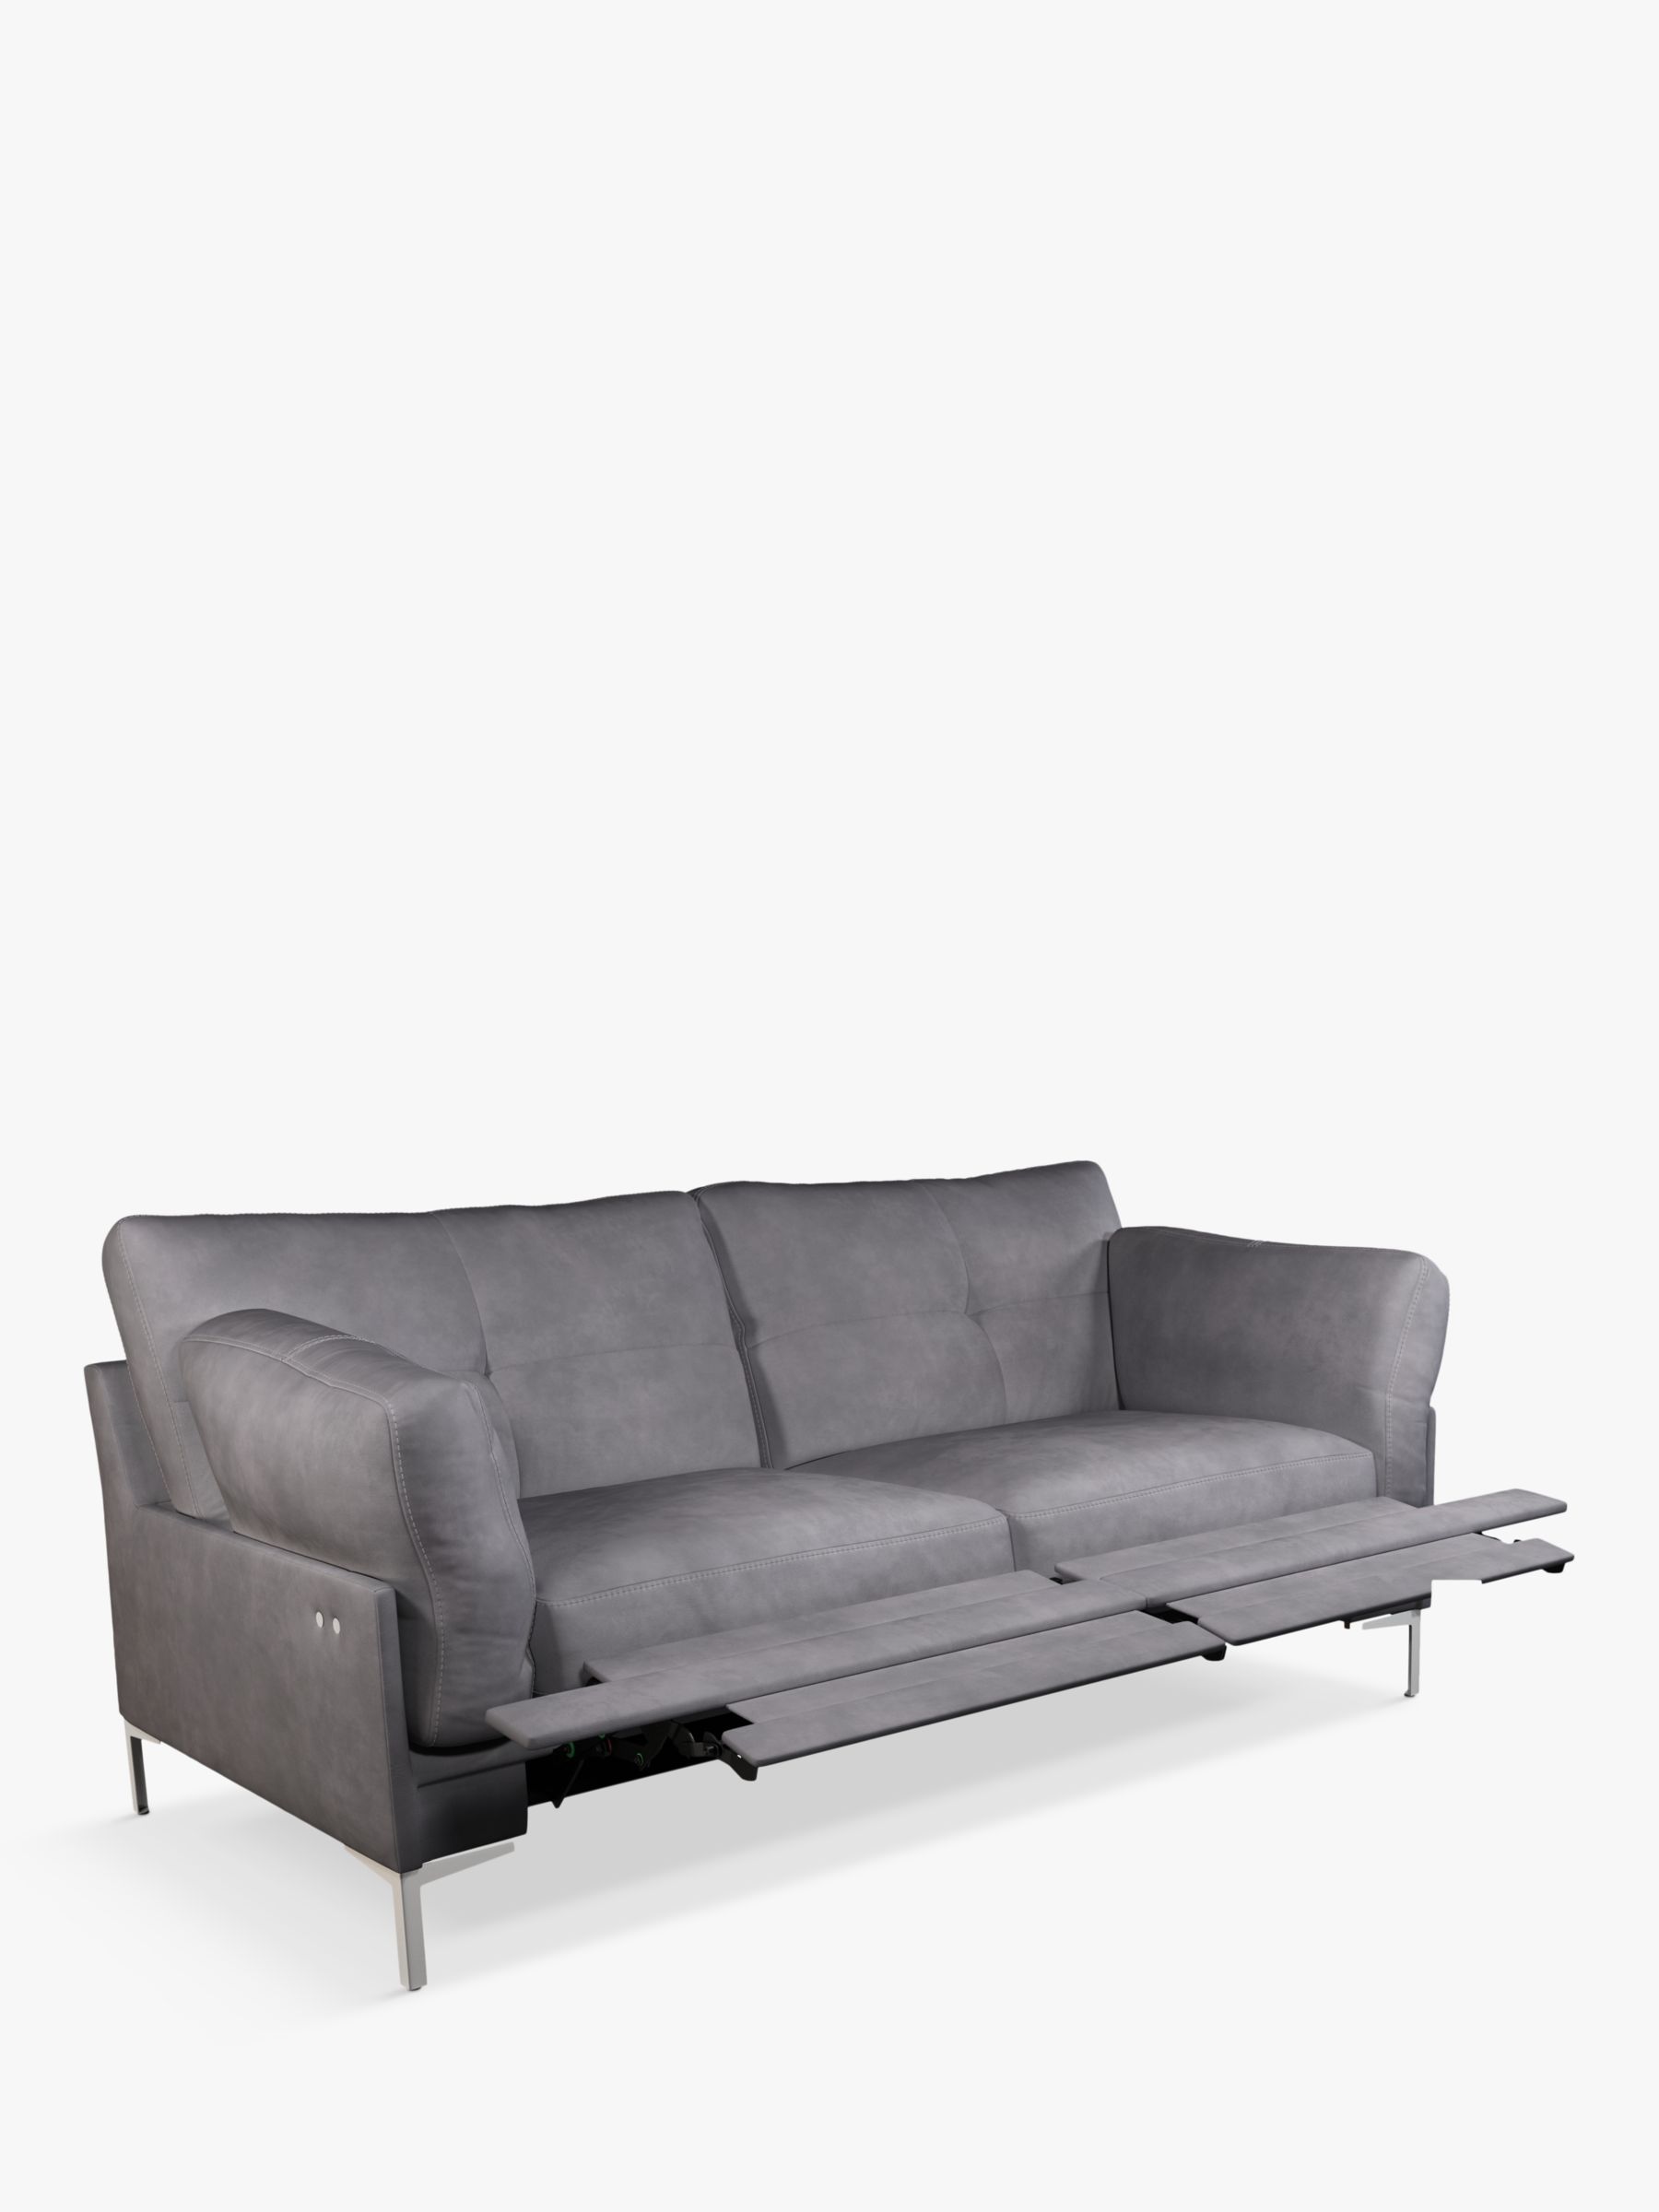 Photo of John lewis java ii motion medium 2 seater leather sofa with footrest mechanism metal leg